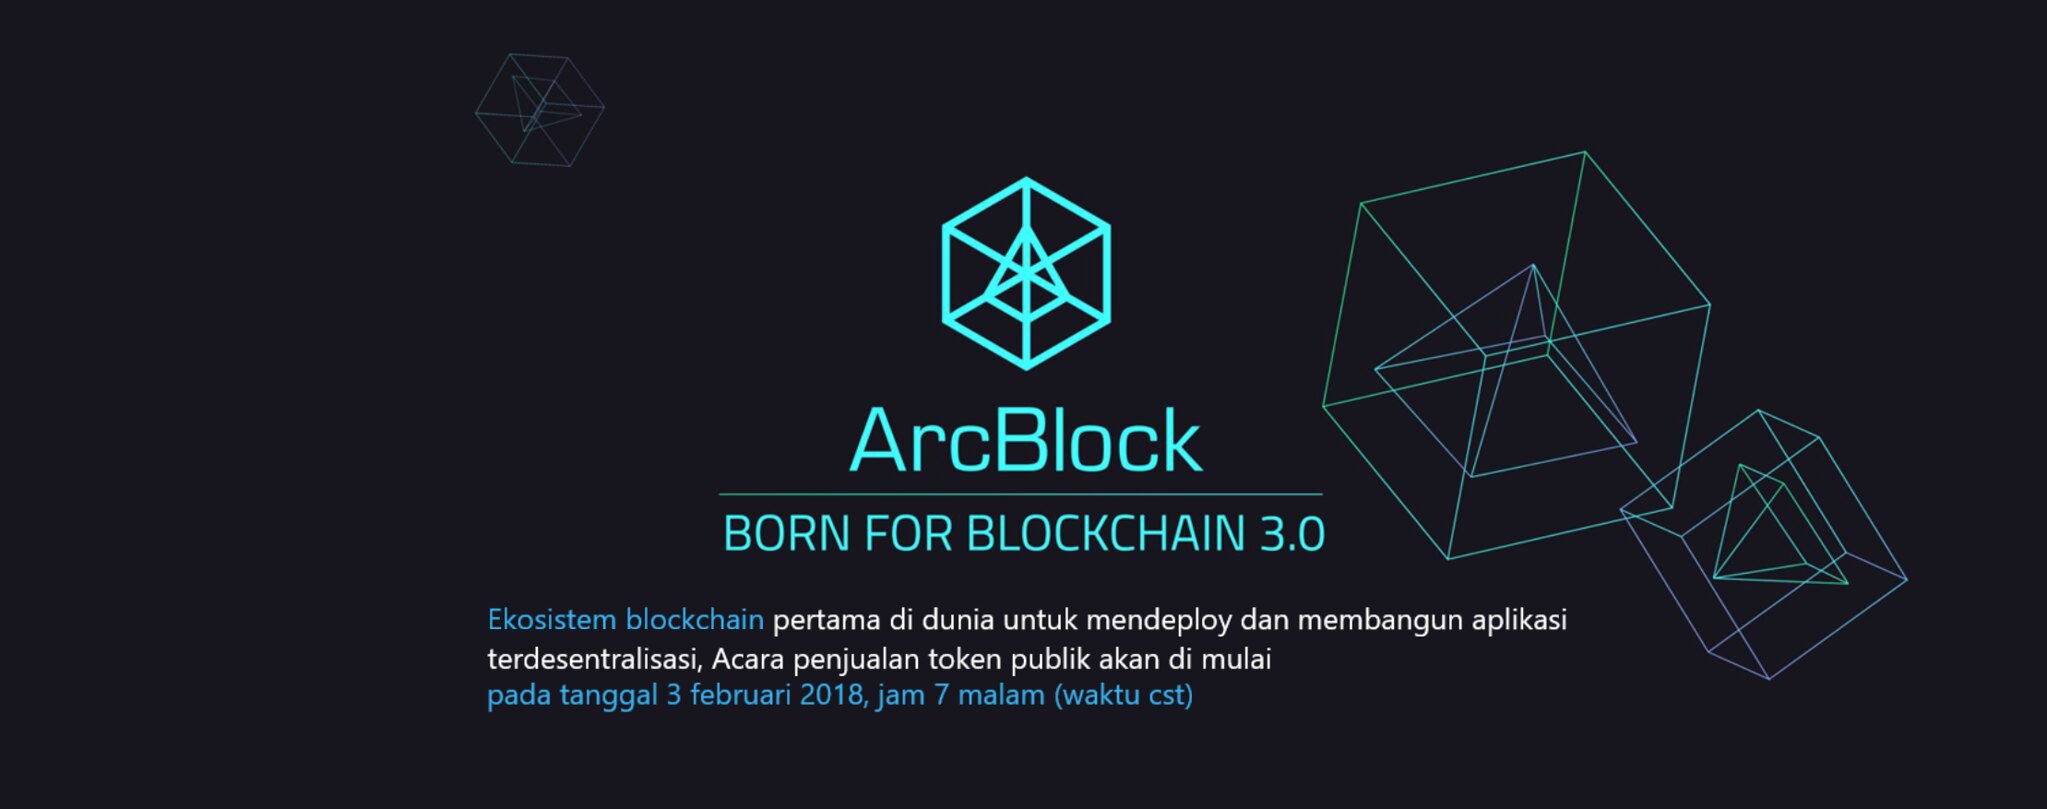 [ANN][ABT] ArcBlock-BORN FOR BLOCKCHAIN 3.0 39579849451_27fb1a7370_k